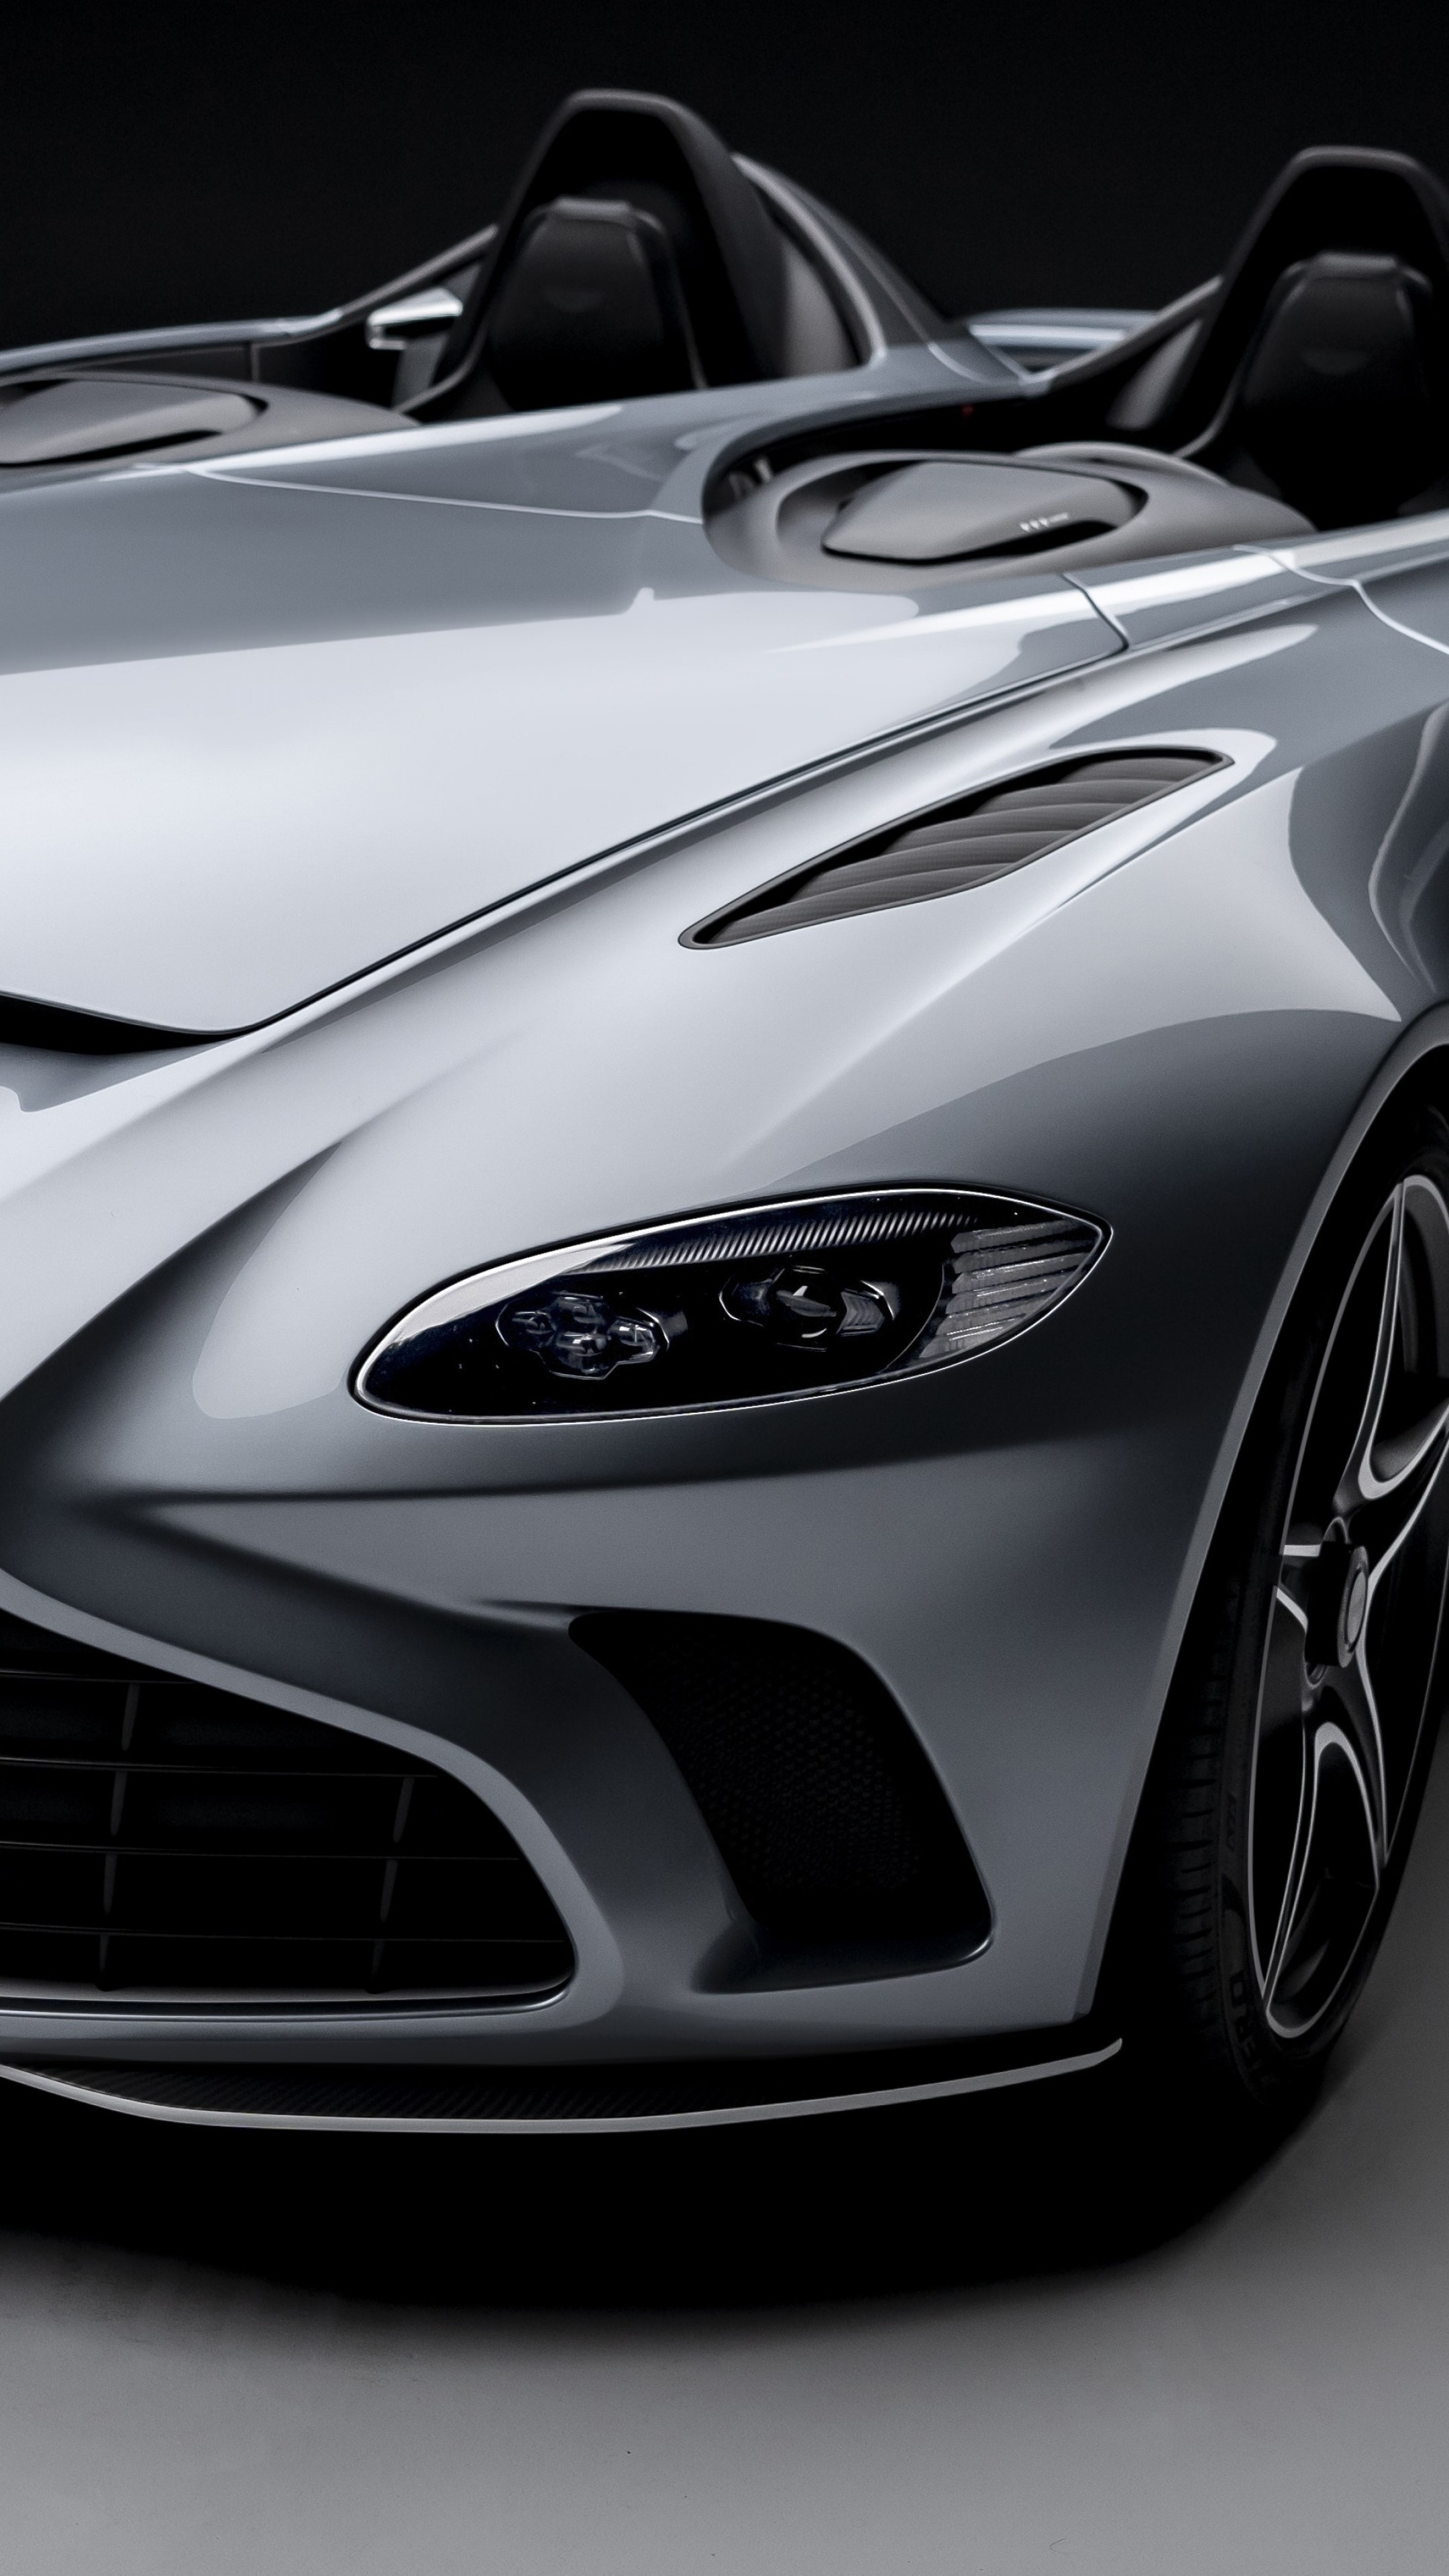 Aston Martin Speedster, Luxury sports car, Astonishing 4K wallpapers, Exclusivity at its finest, 2160x3840 4K Phone